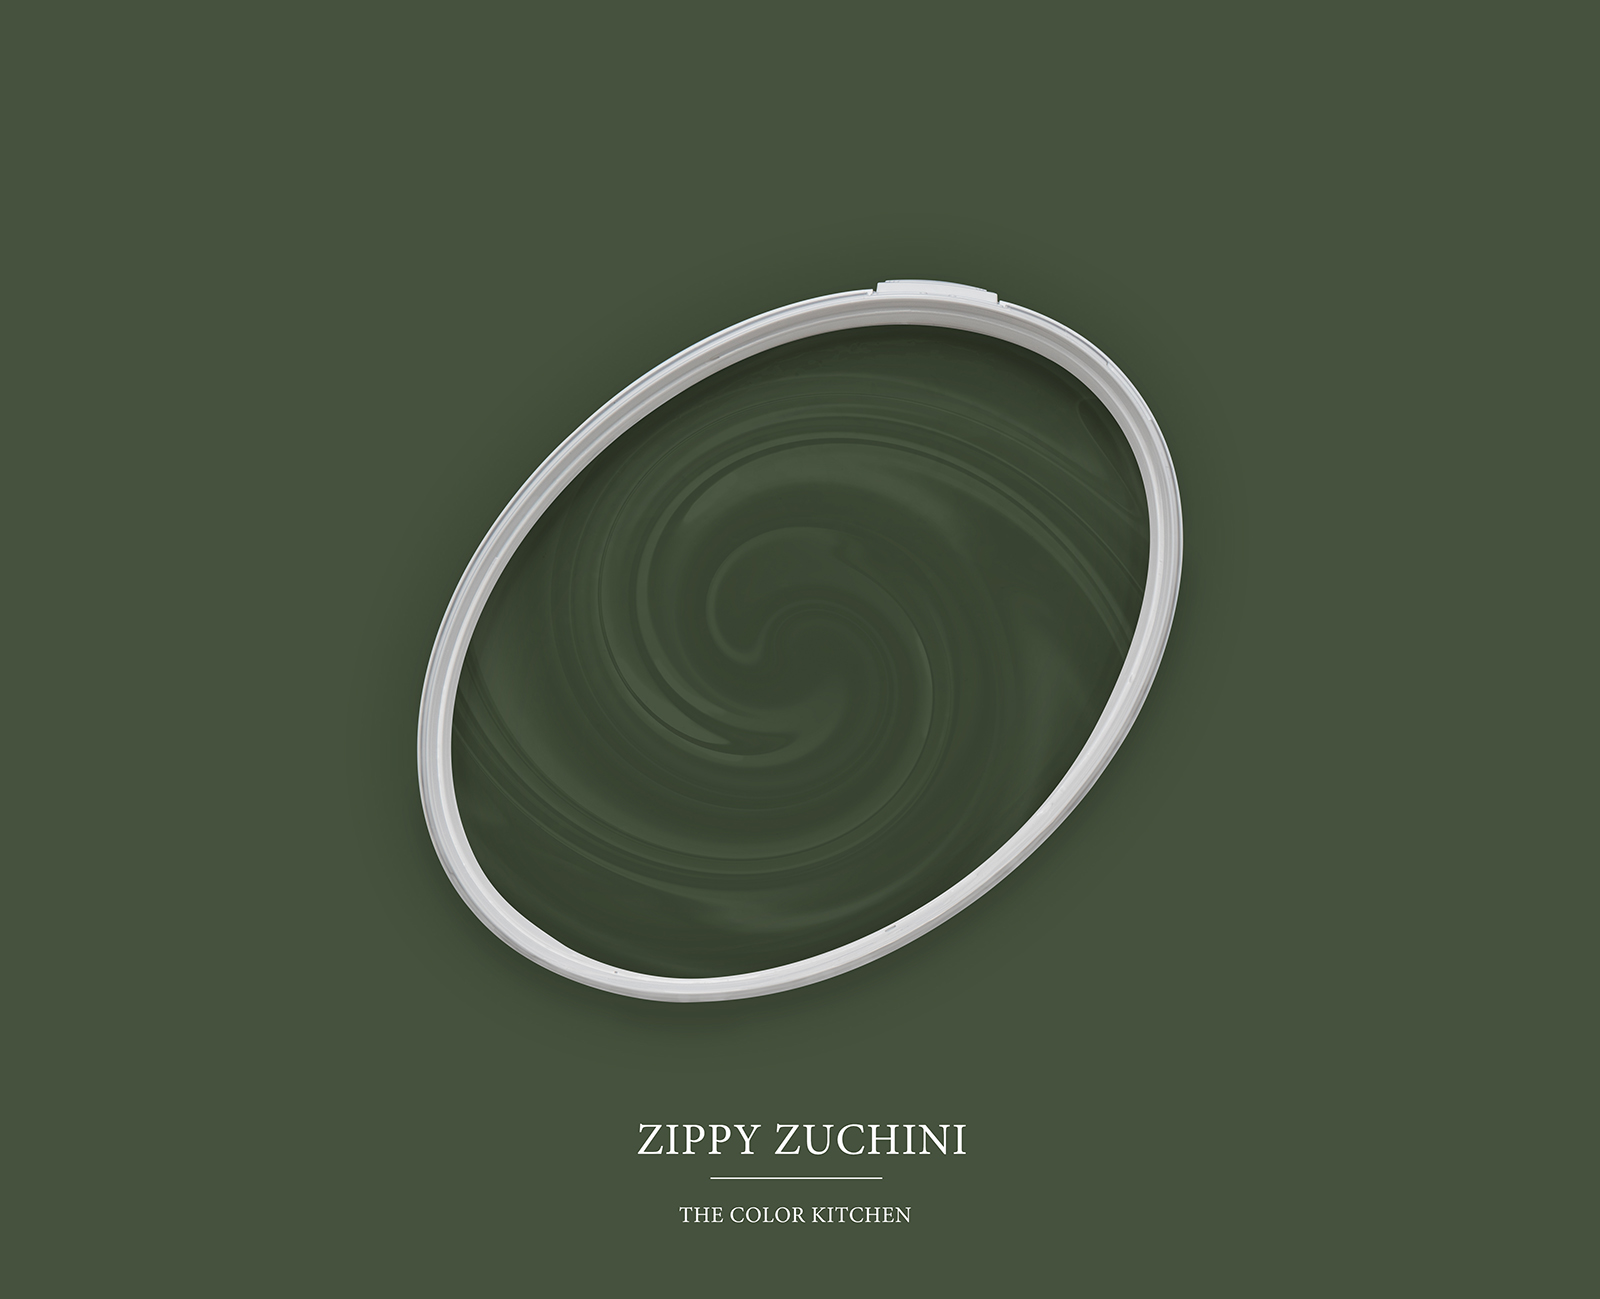 Wall Paint TCK4006 »Zippy Zuchini« in intensive dark green – 2.5 litre